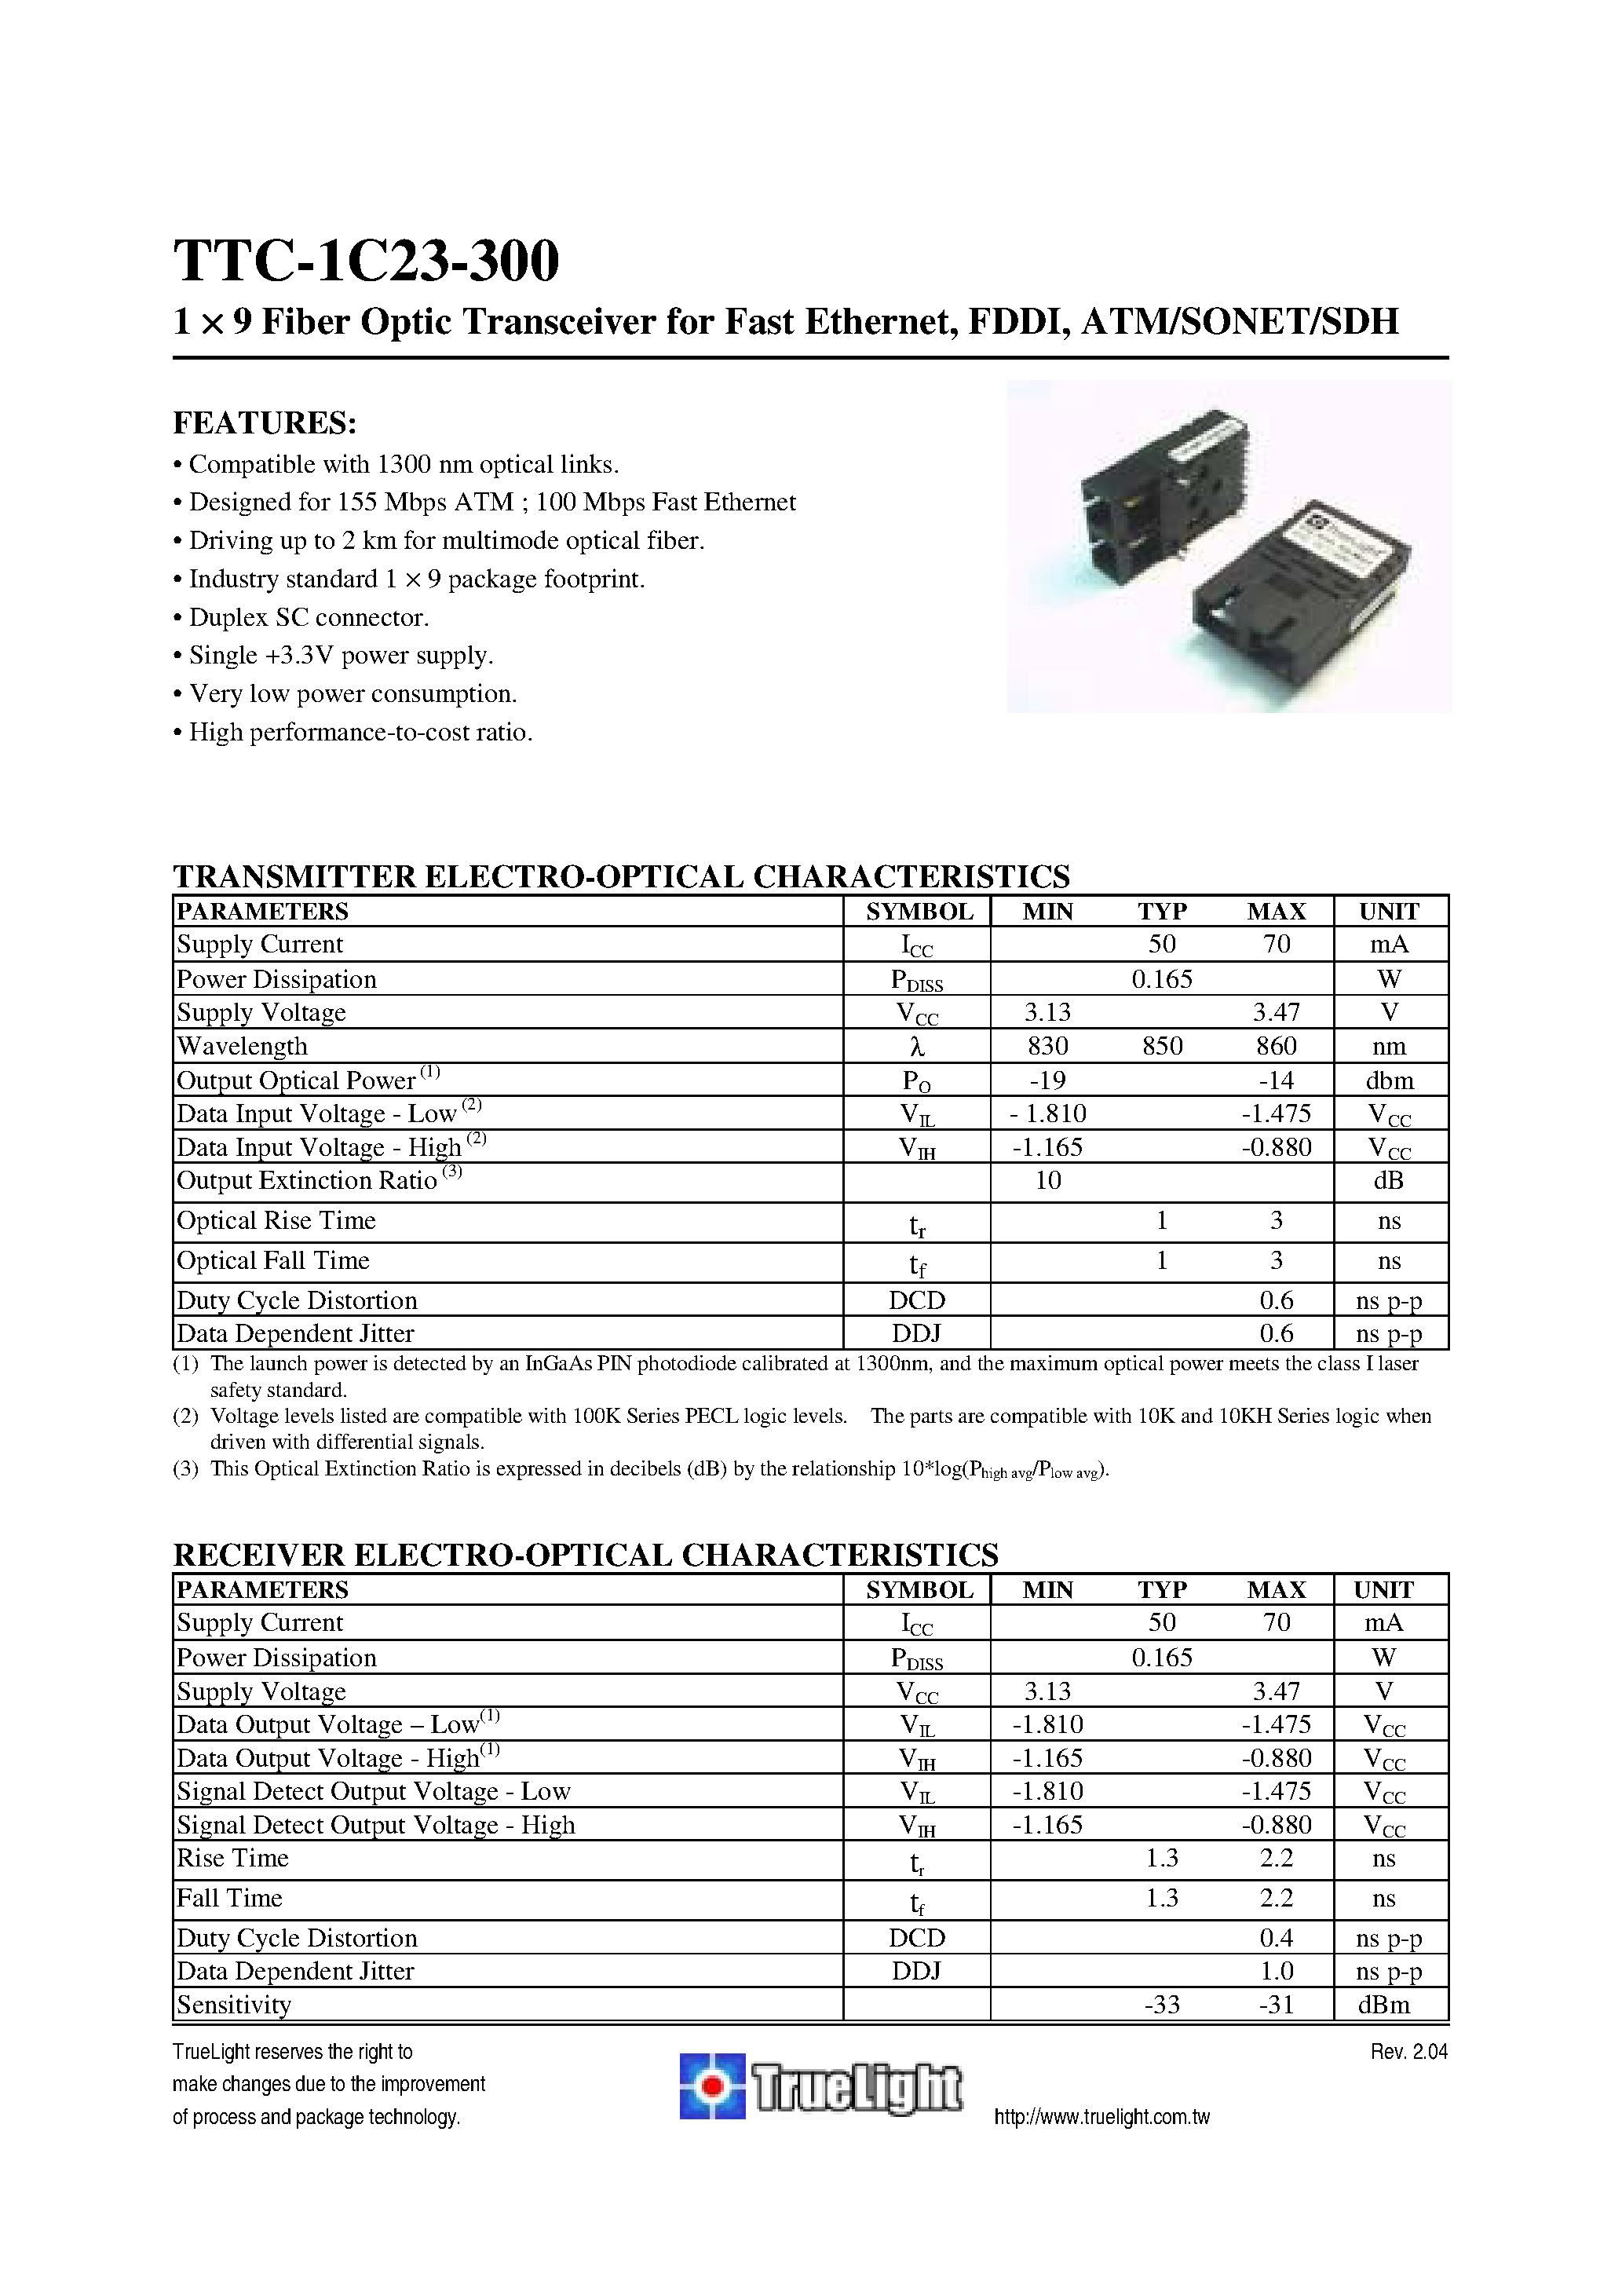 Даташит TTC-1C23-300 - 1 9 Fiber Optic Transceiver for Fast Ethernet/ FDDI/ ATM/SONET/SDH страница 1